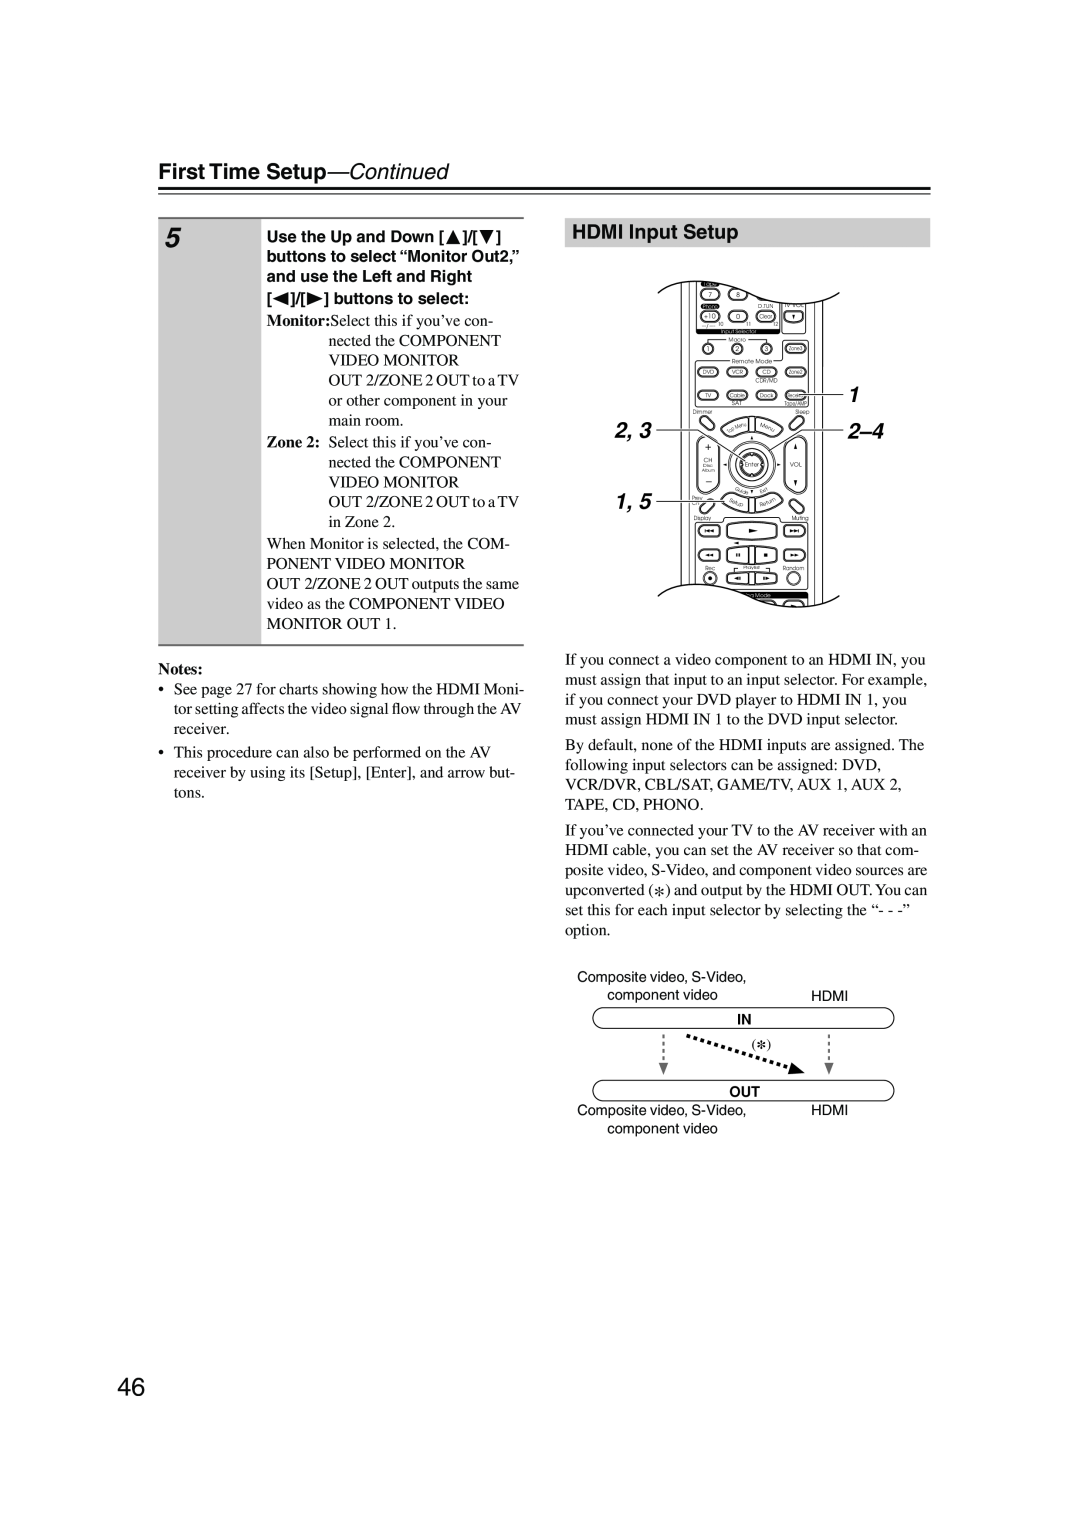 Integra DTR-7.8 instruction manual First Time Setup—Continued, HDMI Input Setup, Notes 